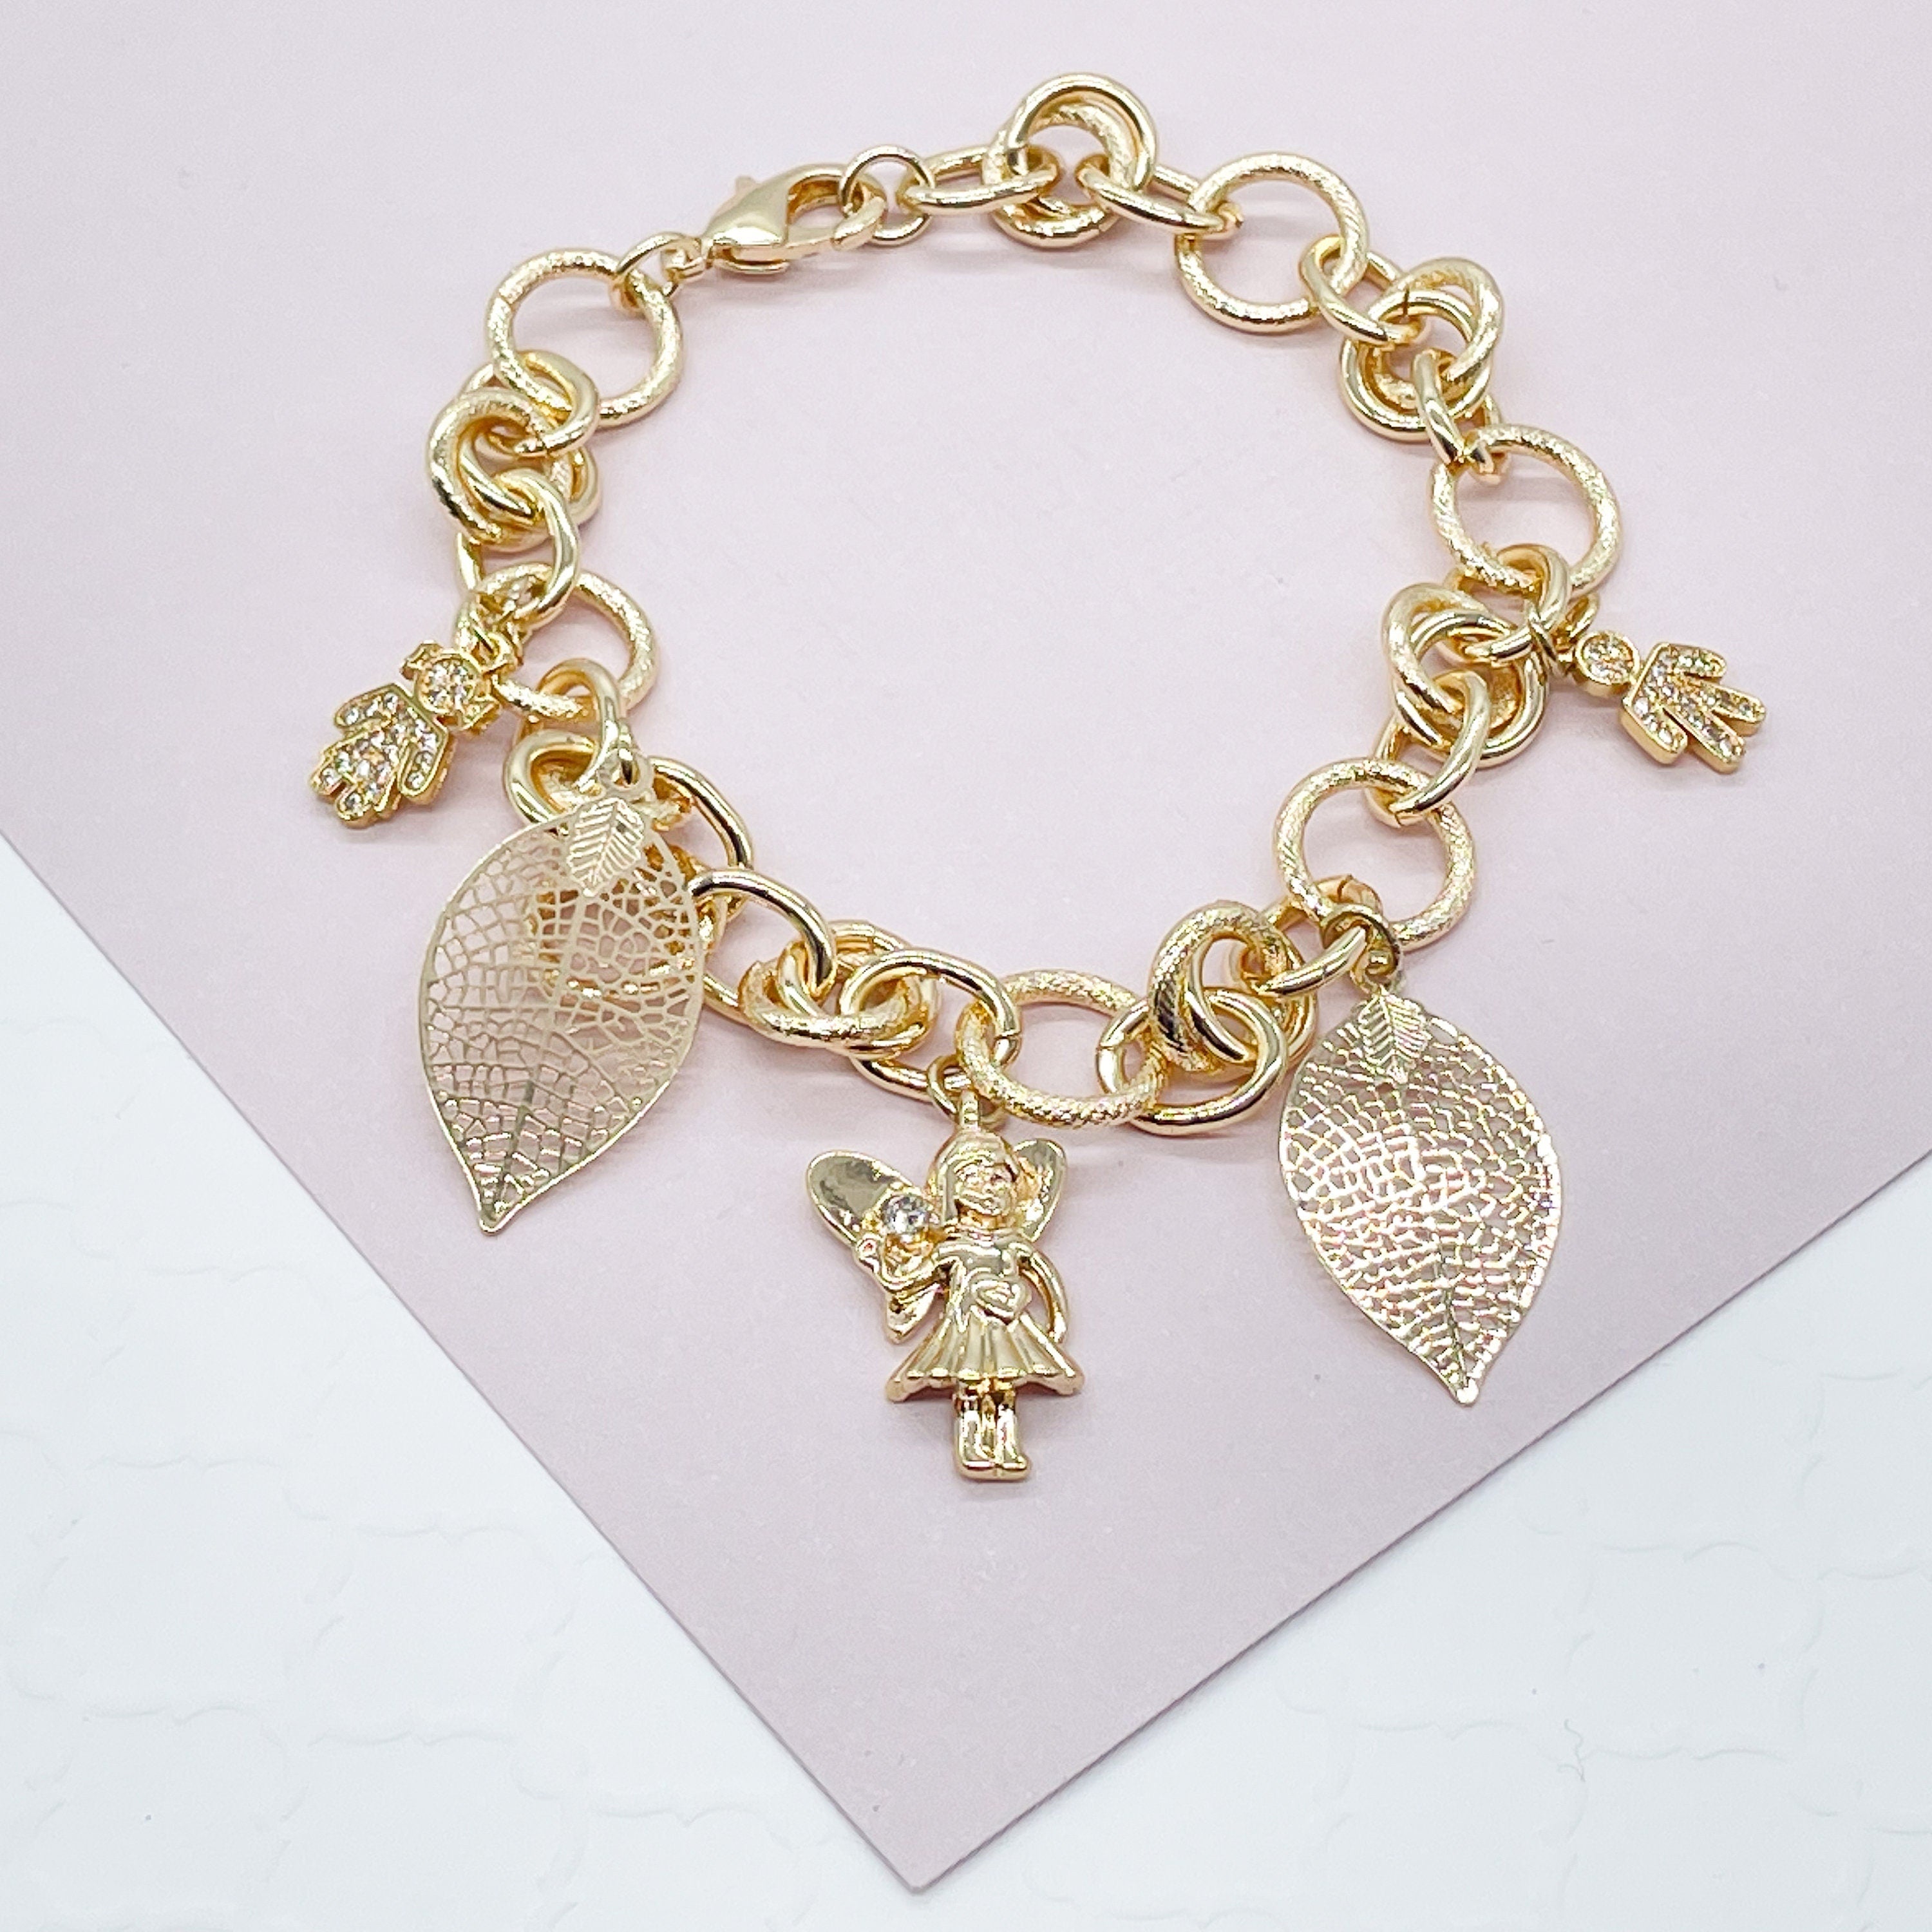 Trendy Gold Plated Bracelet Hanging Tree Design BRAC599 | Gold plated  bracelets, Real gold jewelry, Bracelet designs